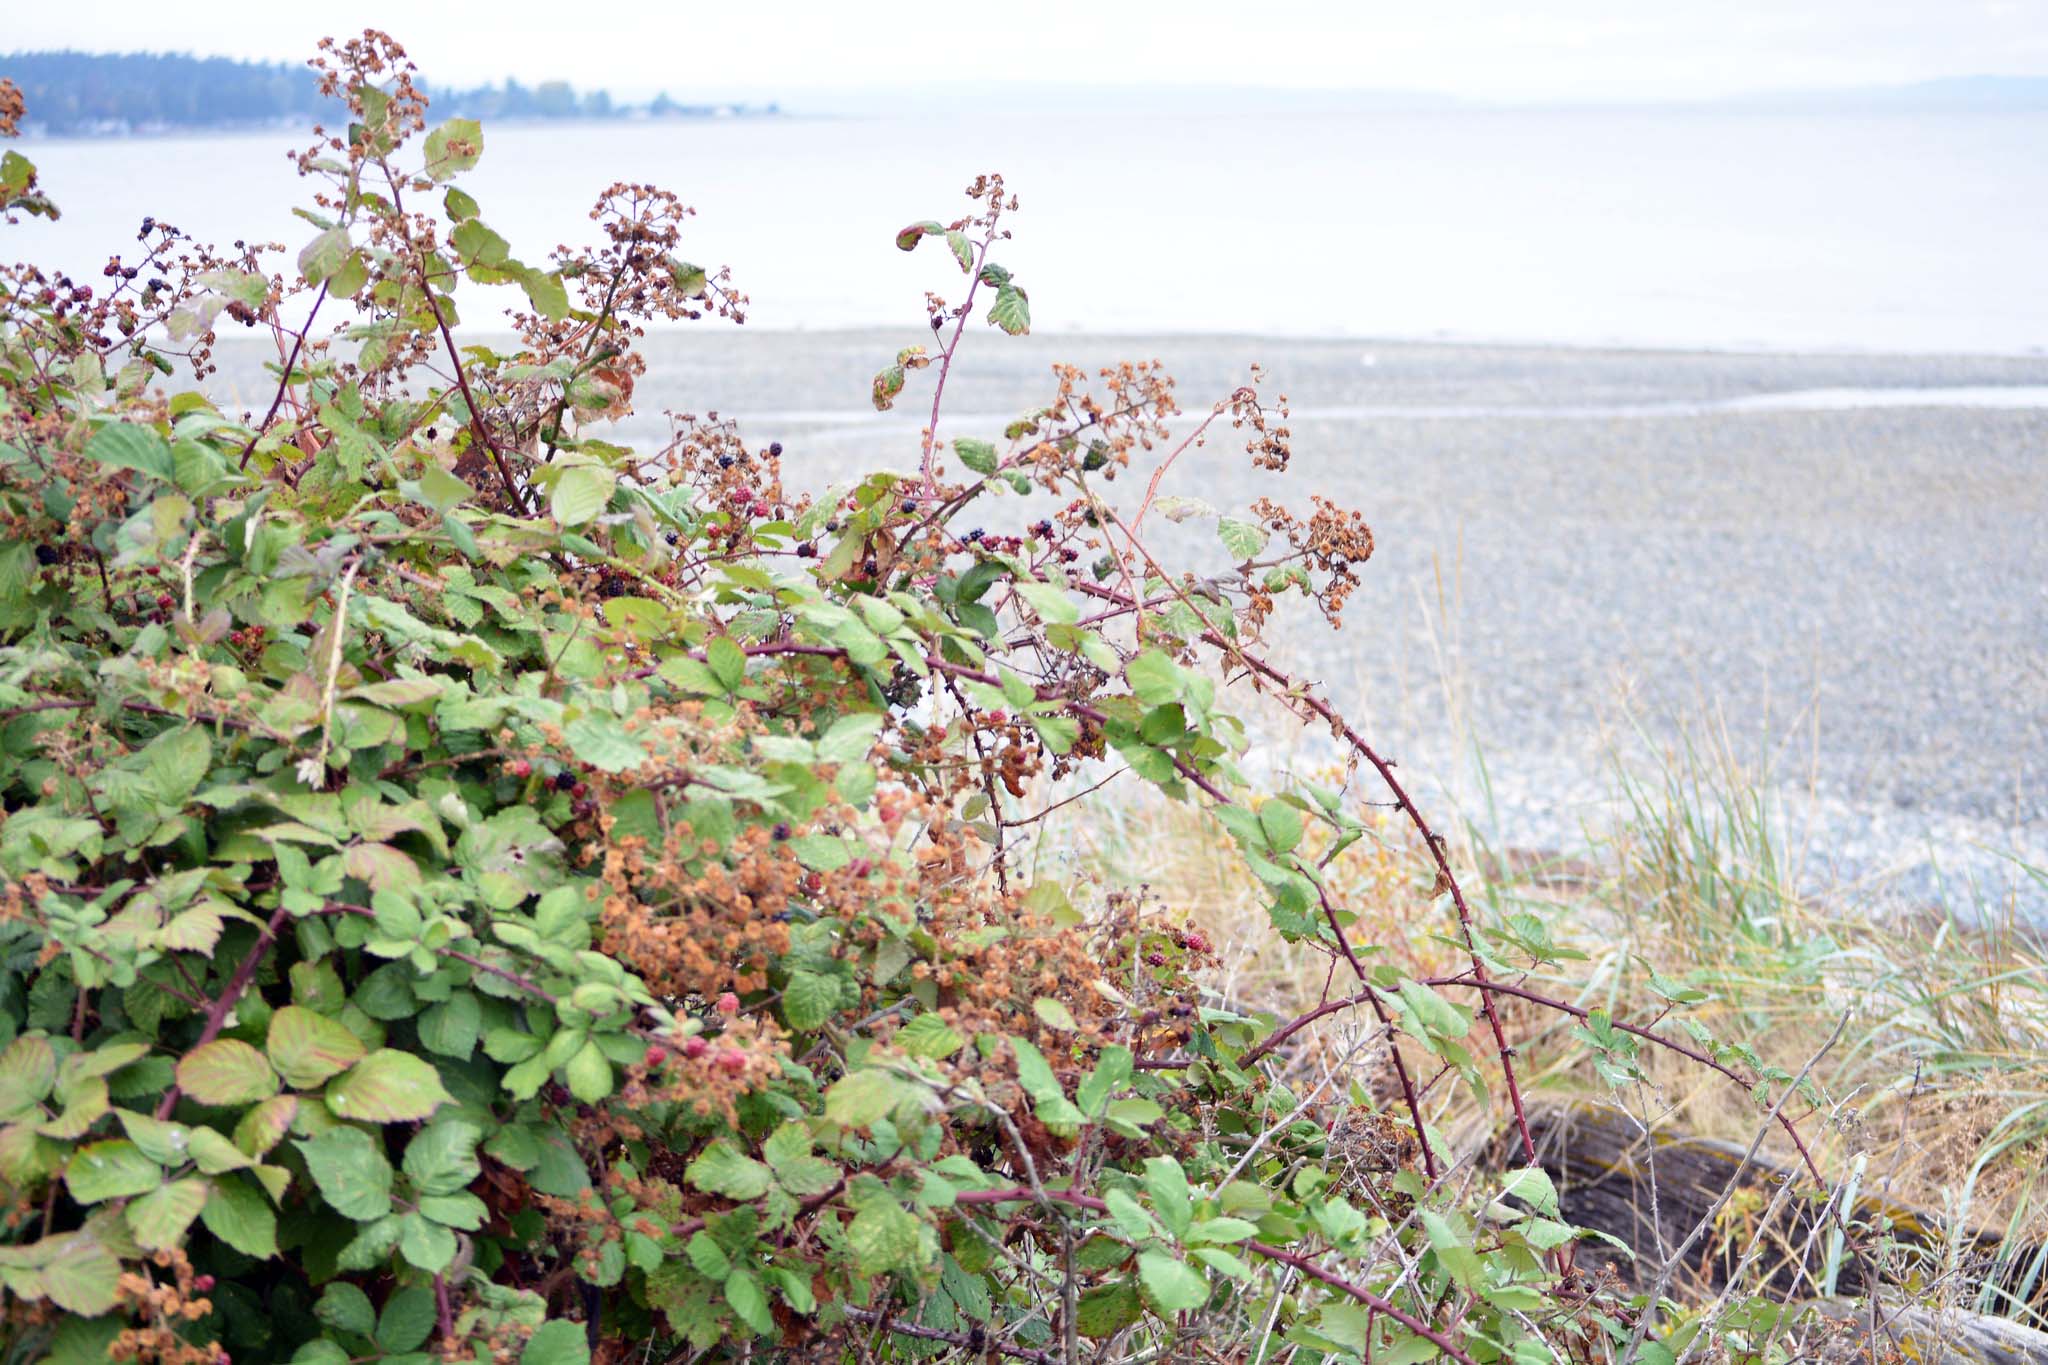 A blackberry bush next to a beach and ocean